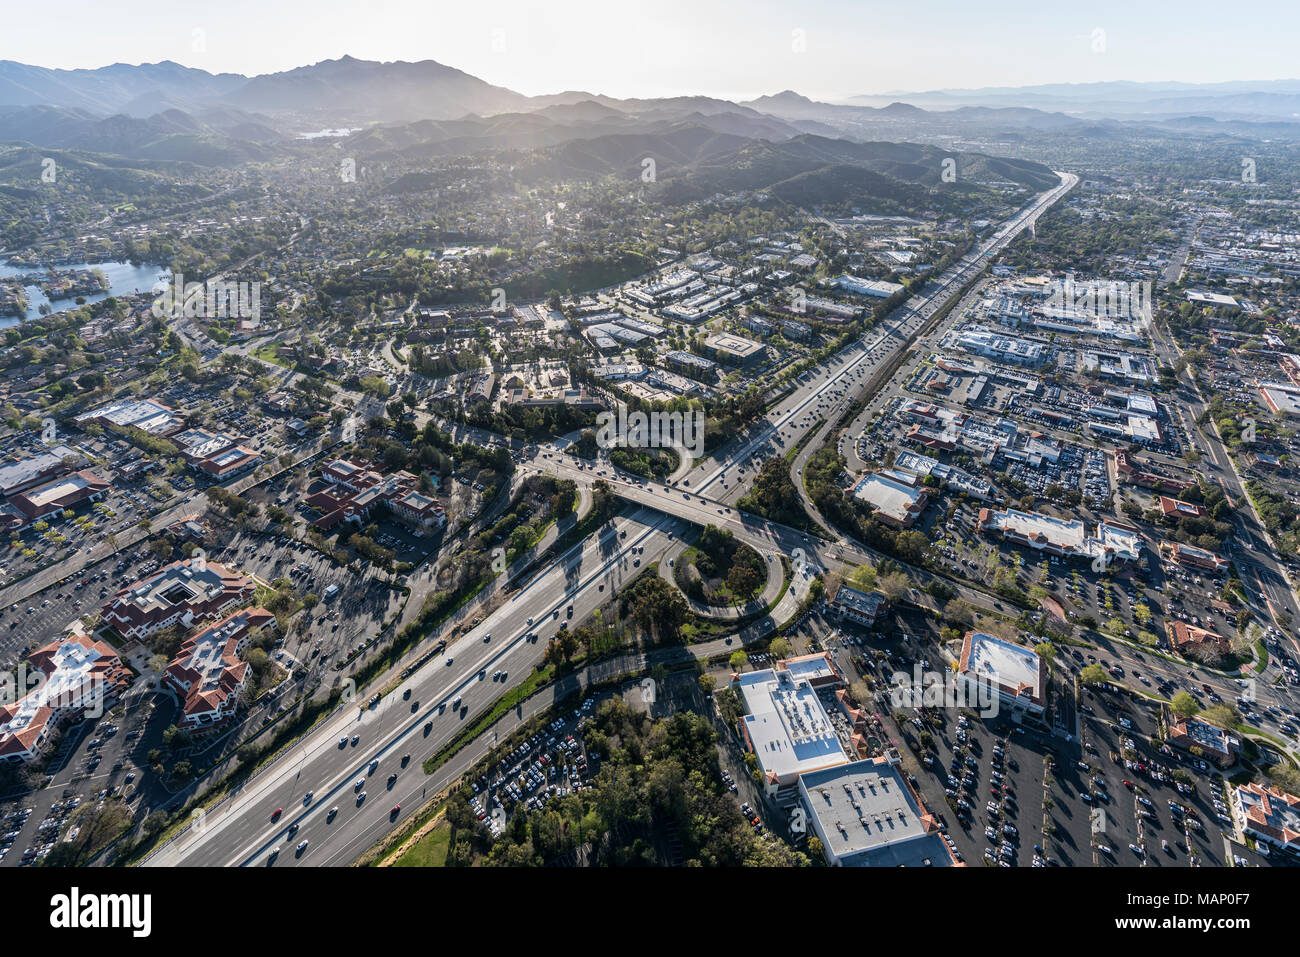 Aerial view of 101 freeway at Weslake Blvd in suburban Thousand Oaks, California. Stock Photo